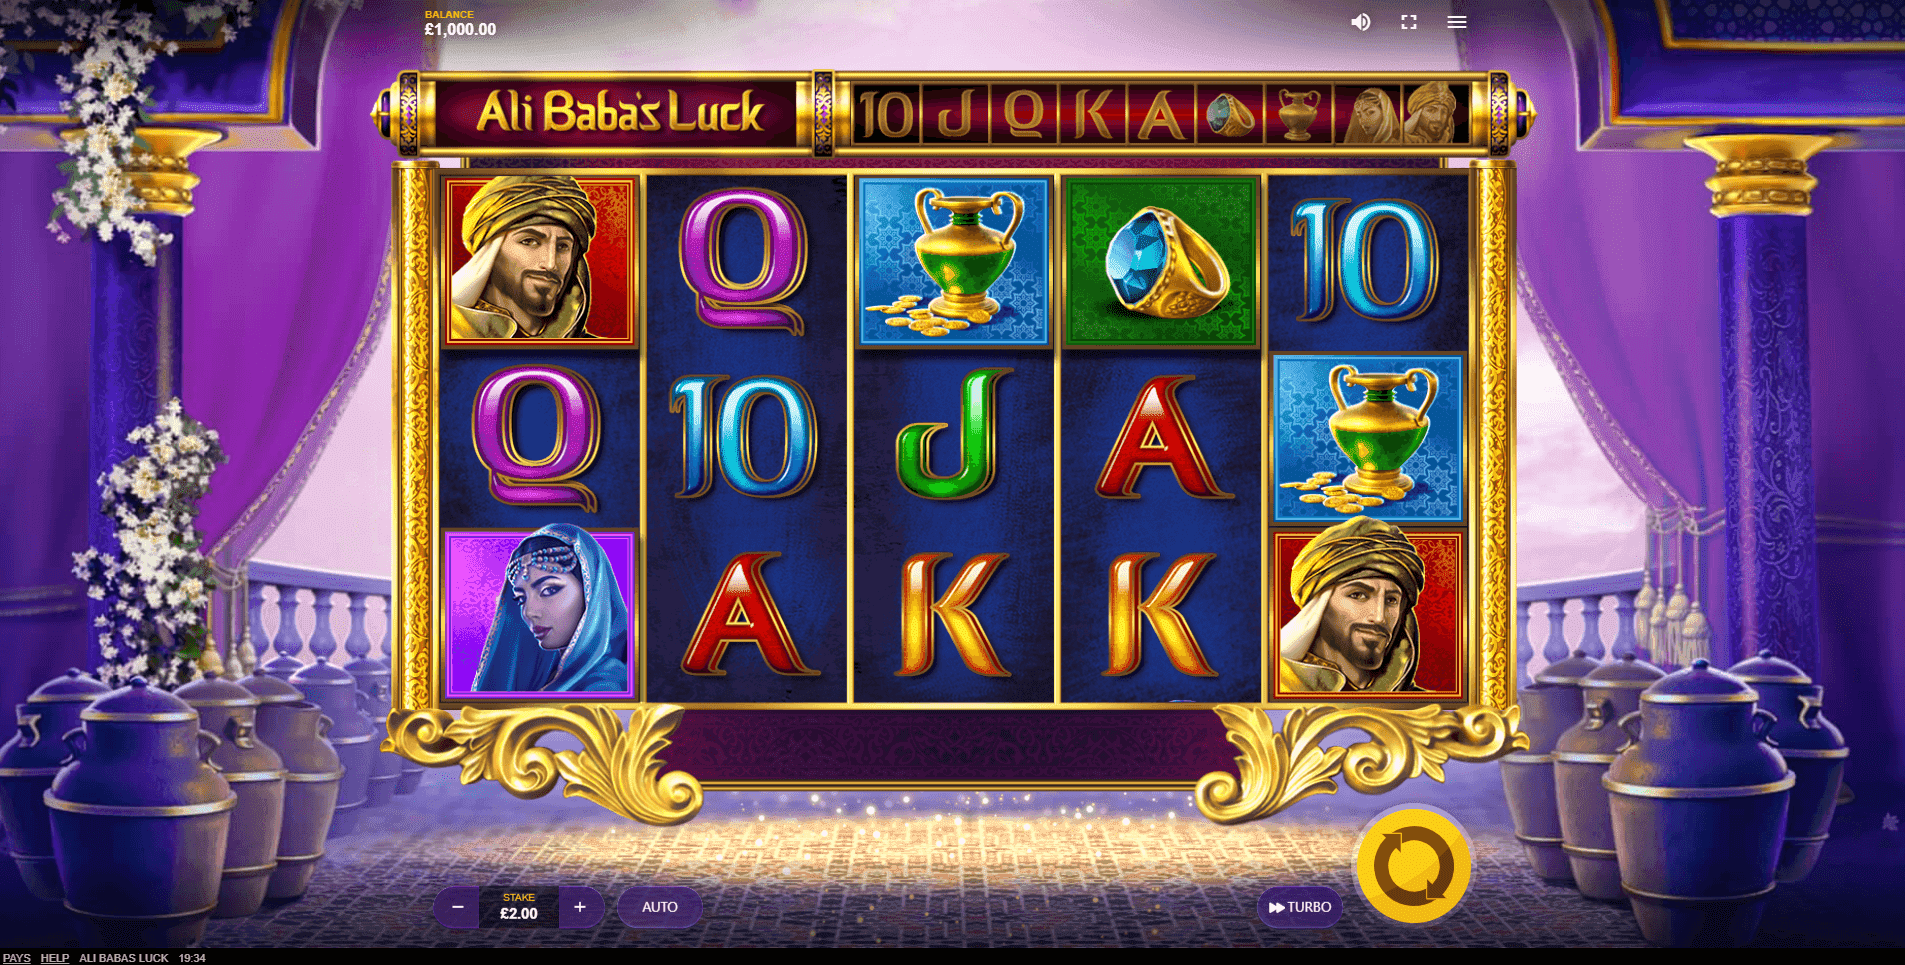 Ali Babas Luck slot play free